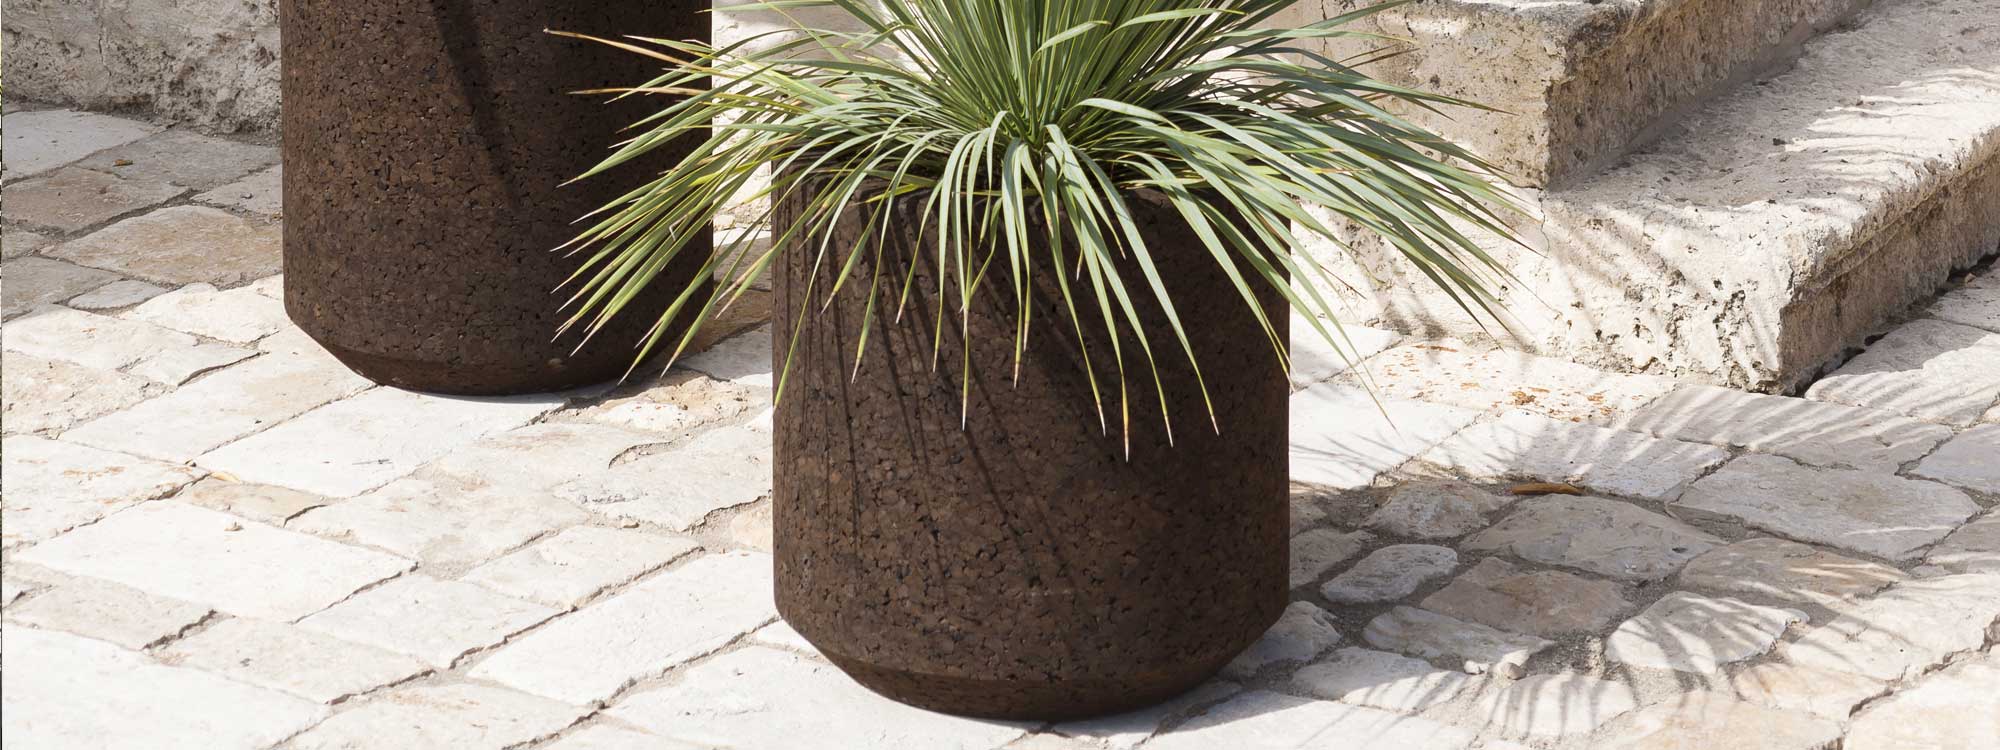 Image of RODA Cortica cork planter with Cordyline plant, shown on cobblestone floor